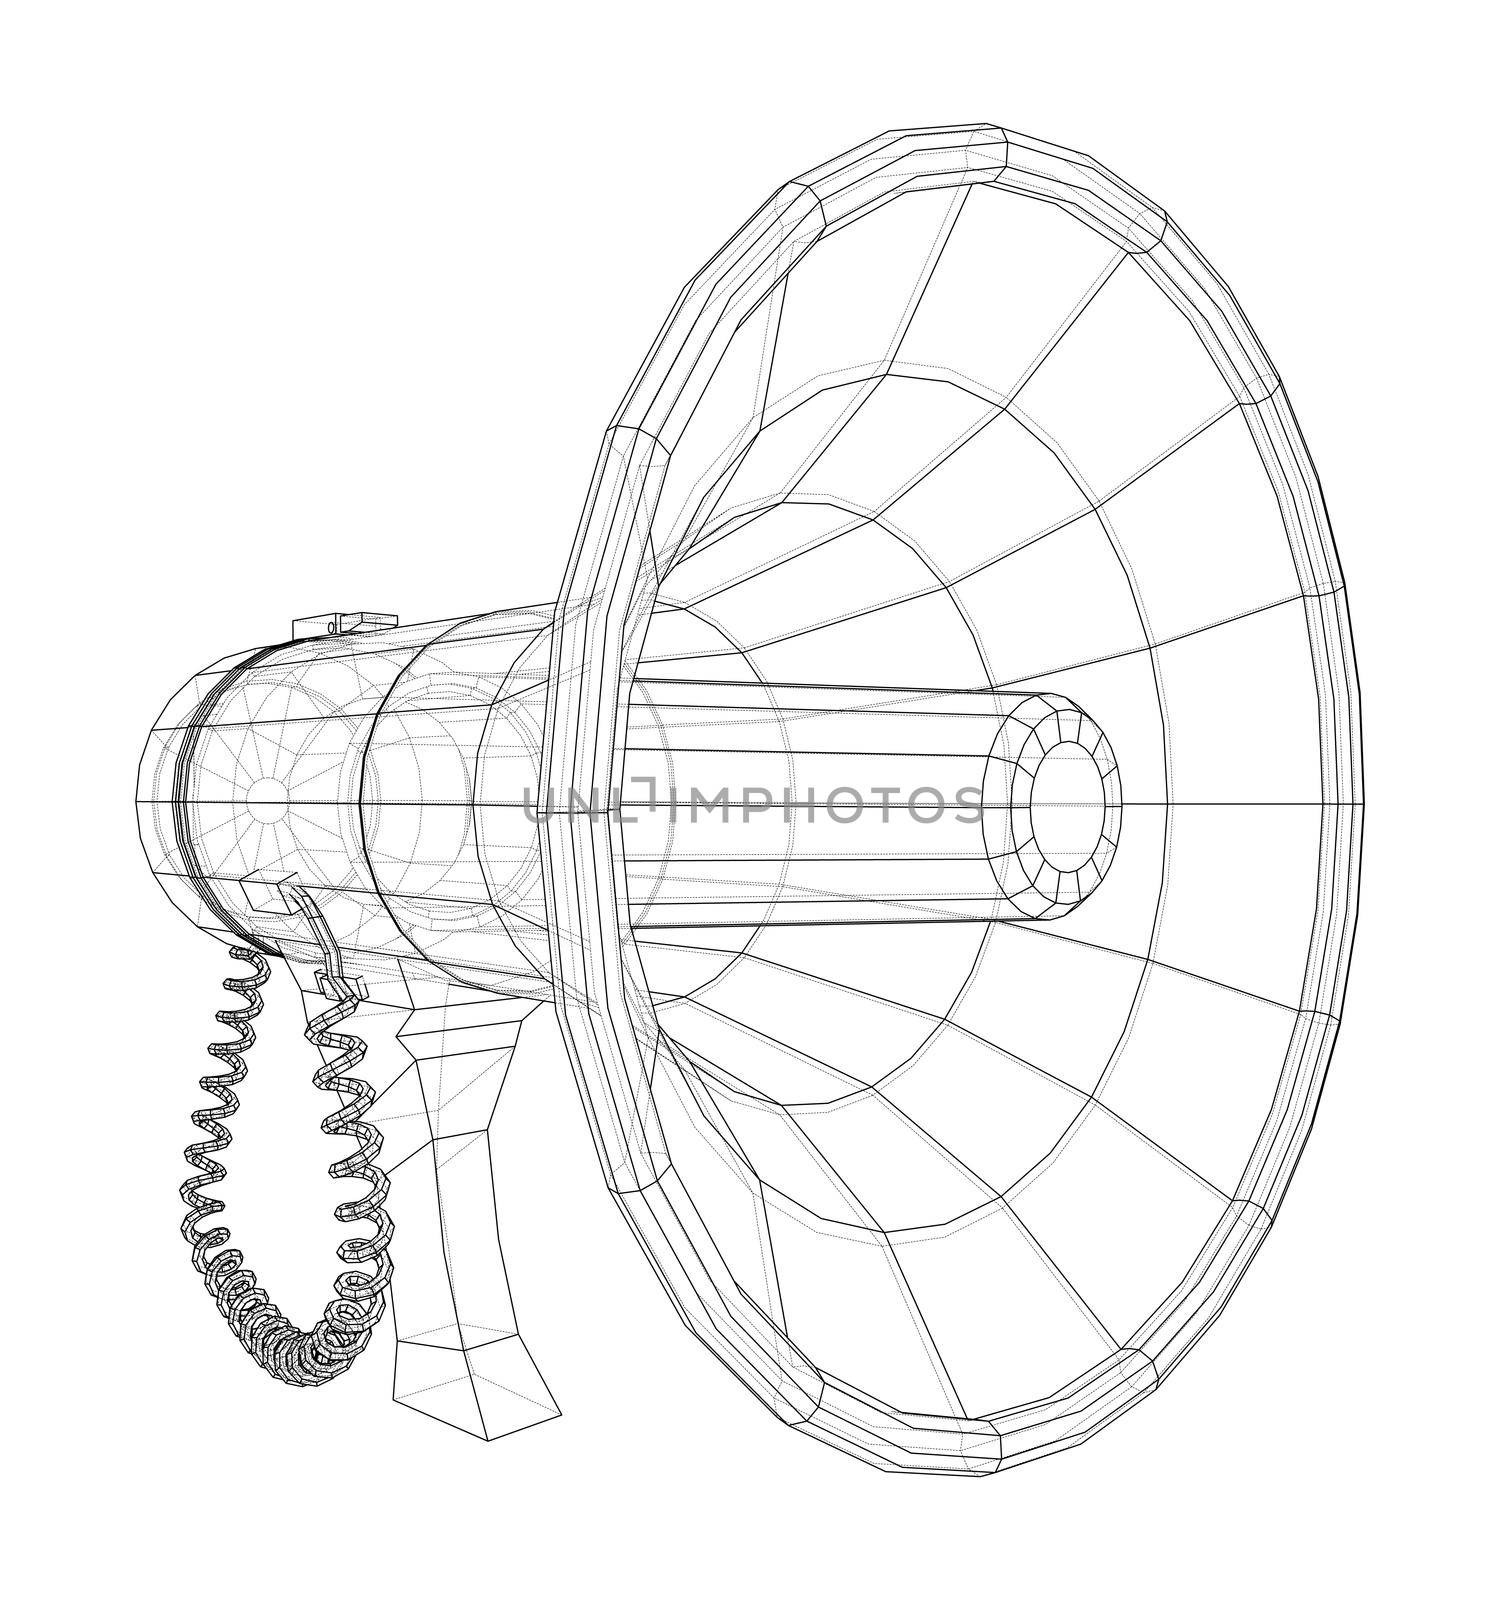 Megaphone concept outline. 3d illustration. Wire-frame style